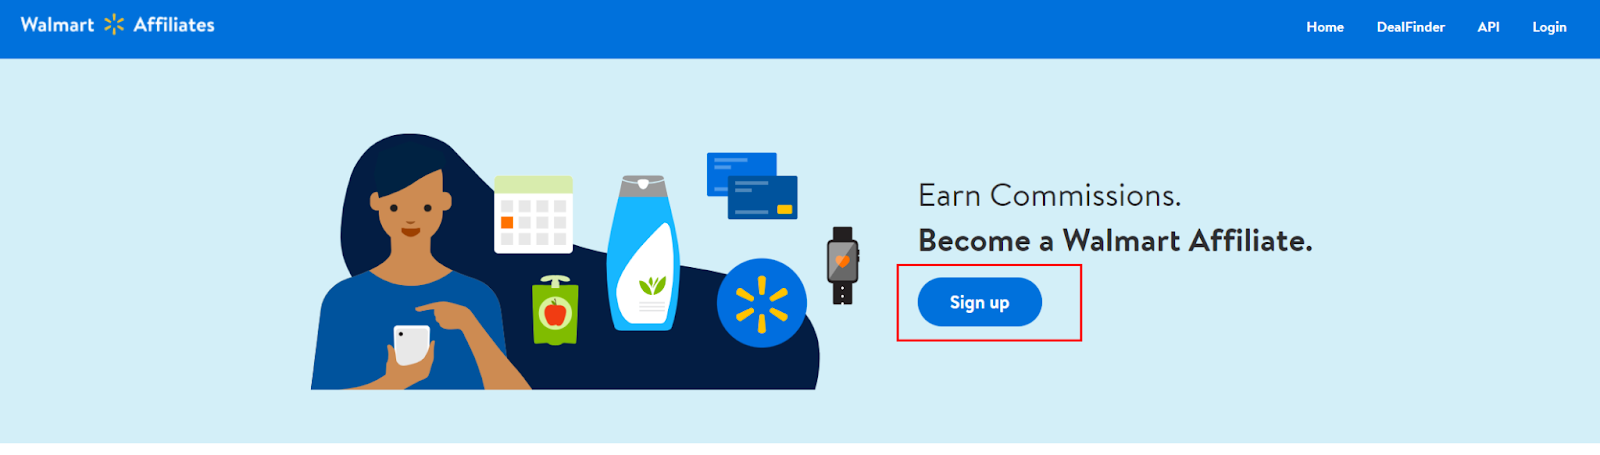 Walmart affiliate program page